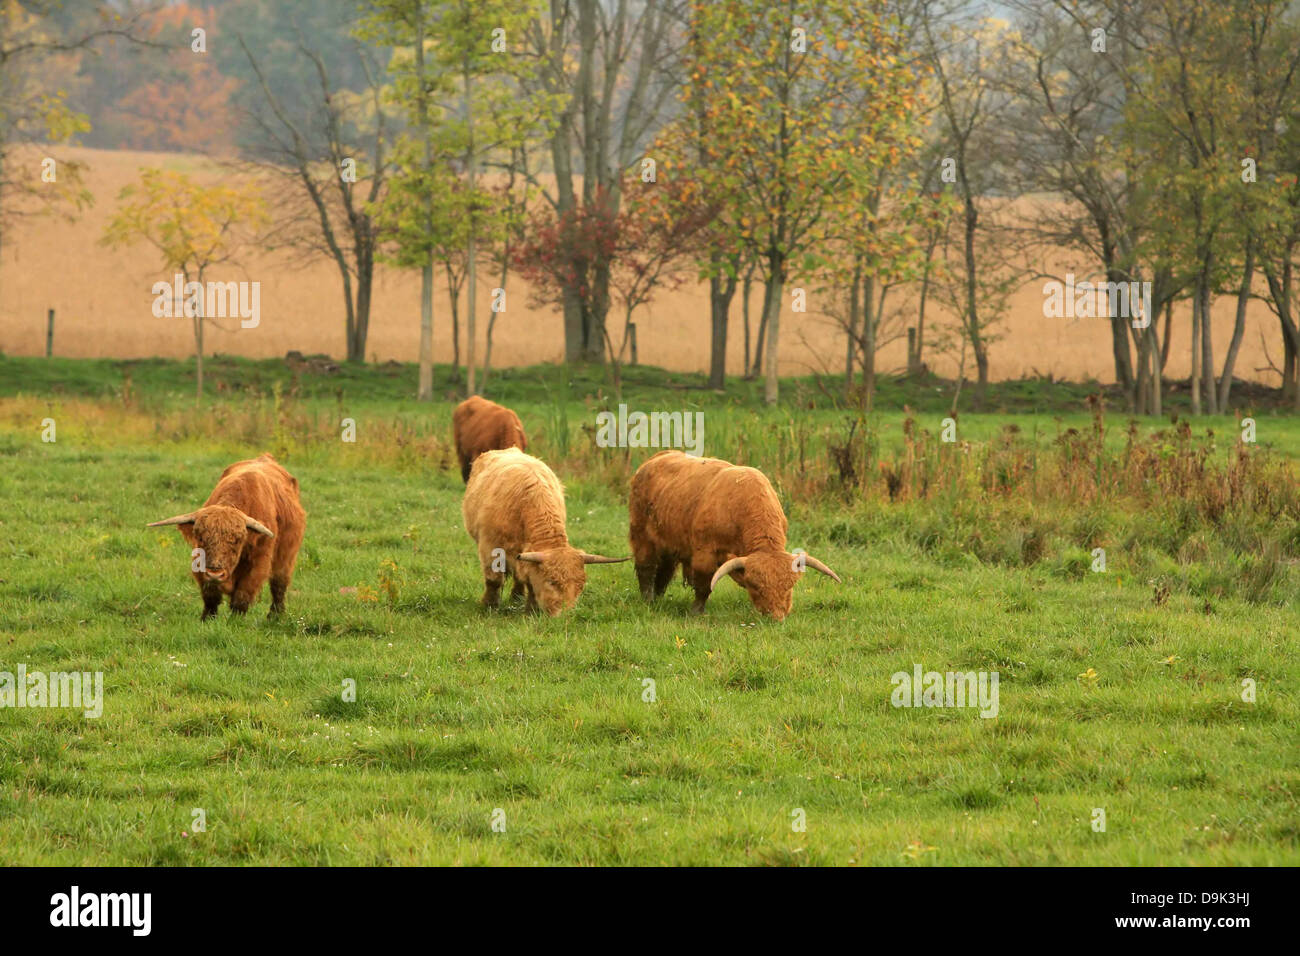 cows bull steer animal horns farm field graze grazing eat grass agriculture Stock Photo